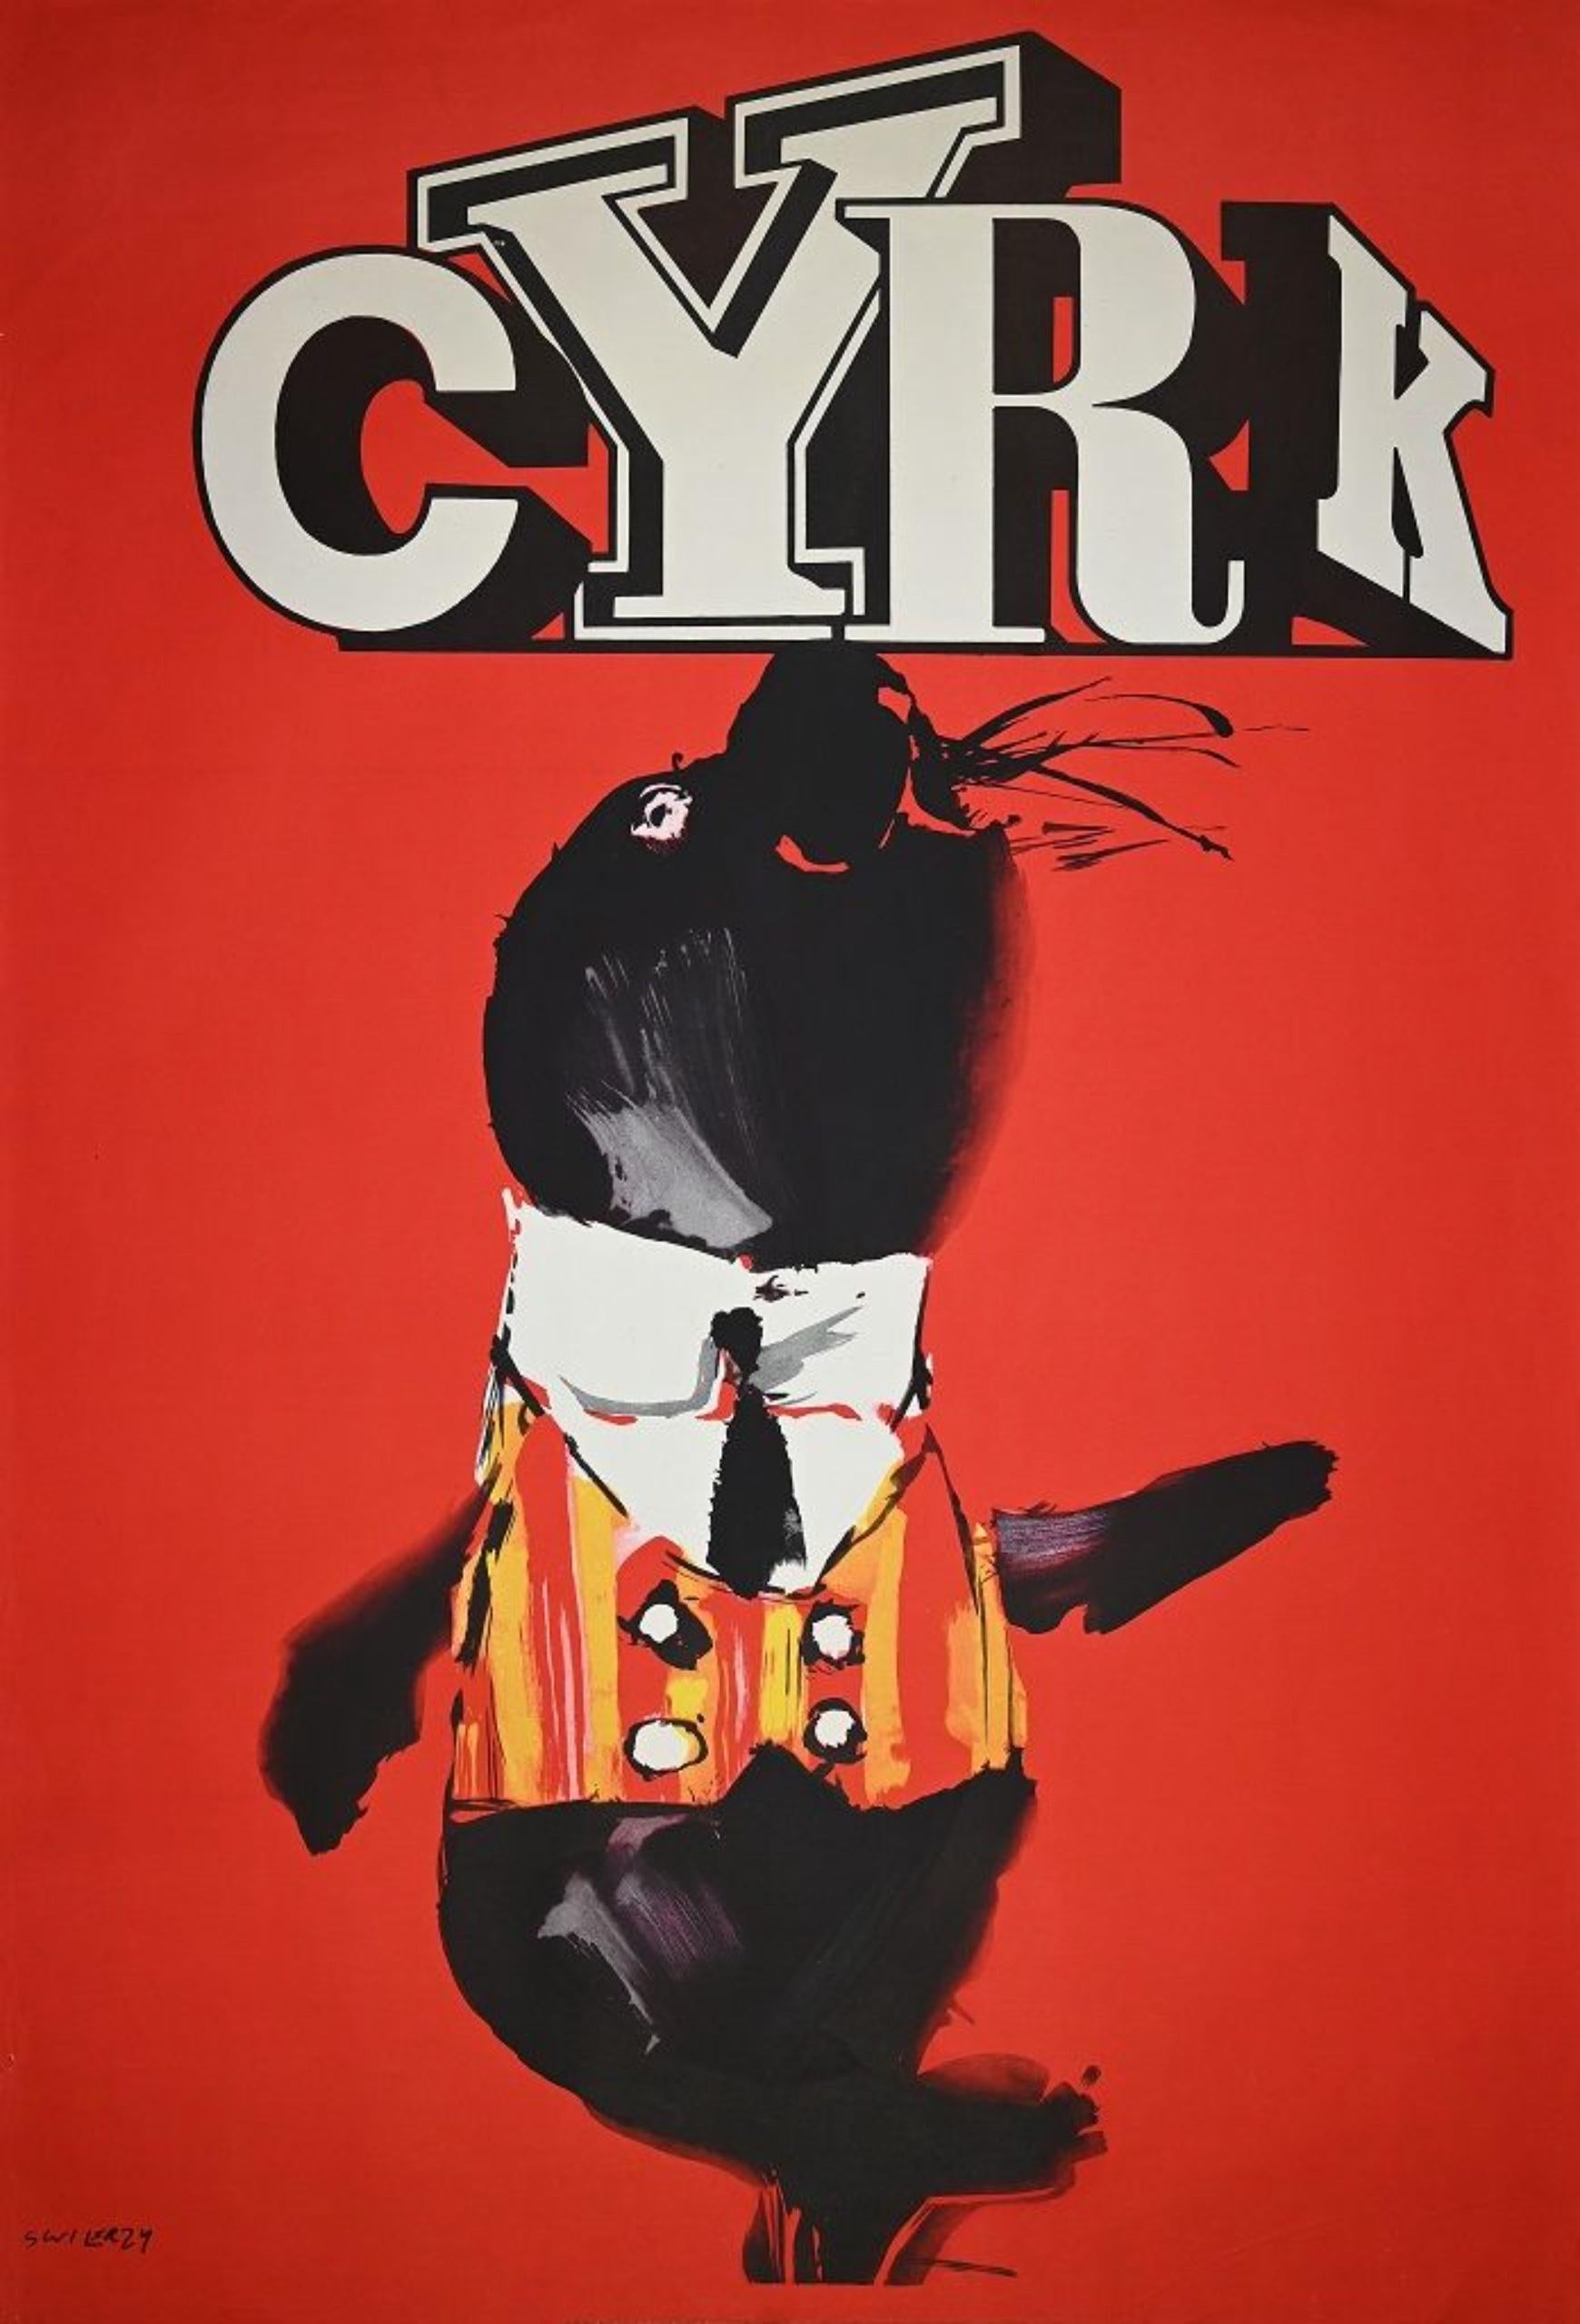 Cyrk - Vintage Poster by Waldemar Swierzy - 1980s